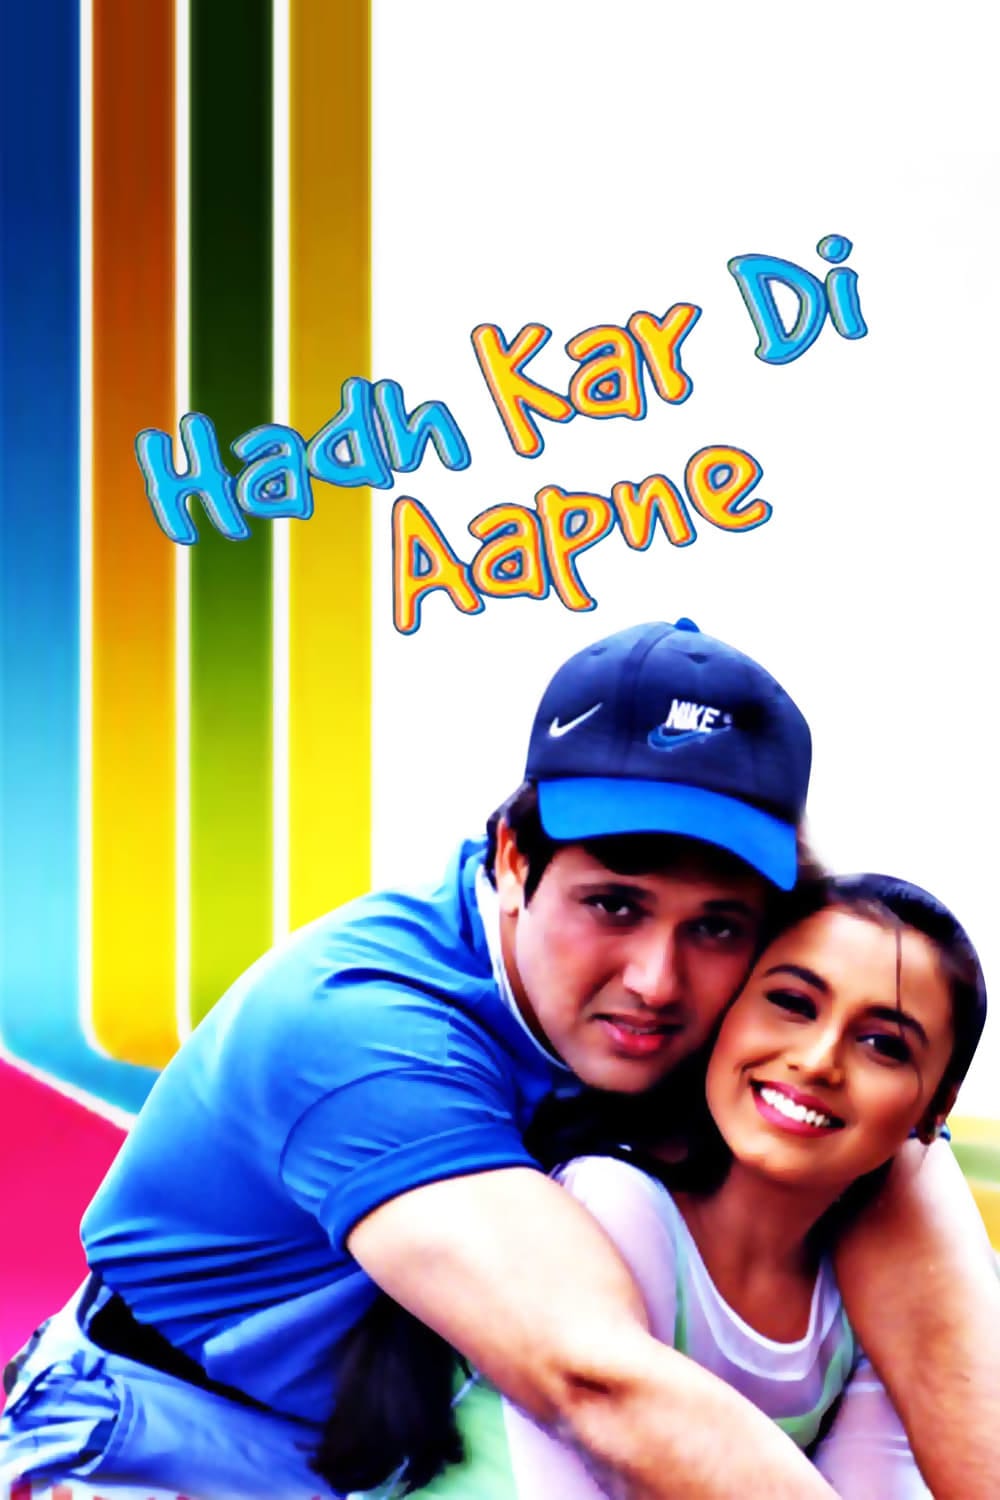 Poster for the movie "Hadh Kar Di Aapne"